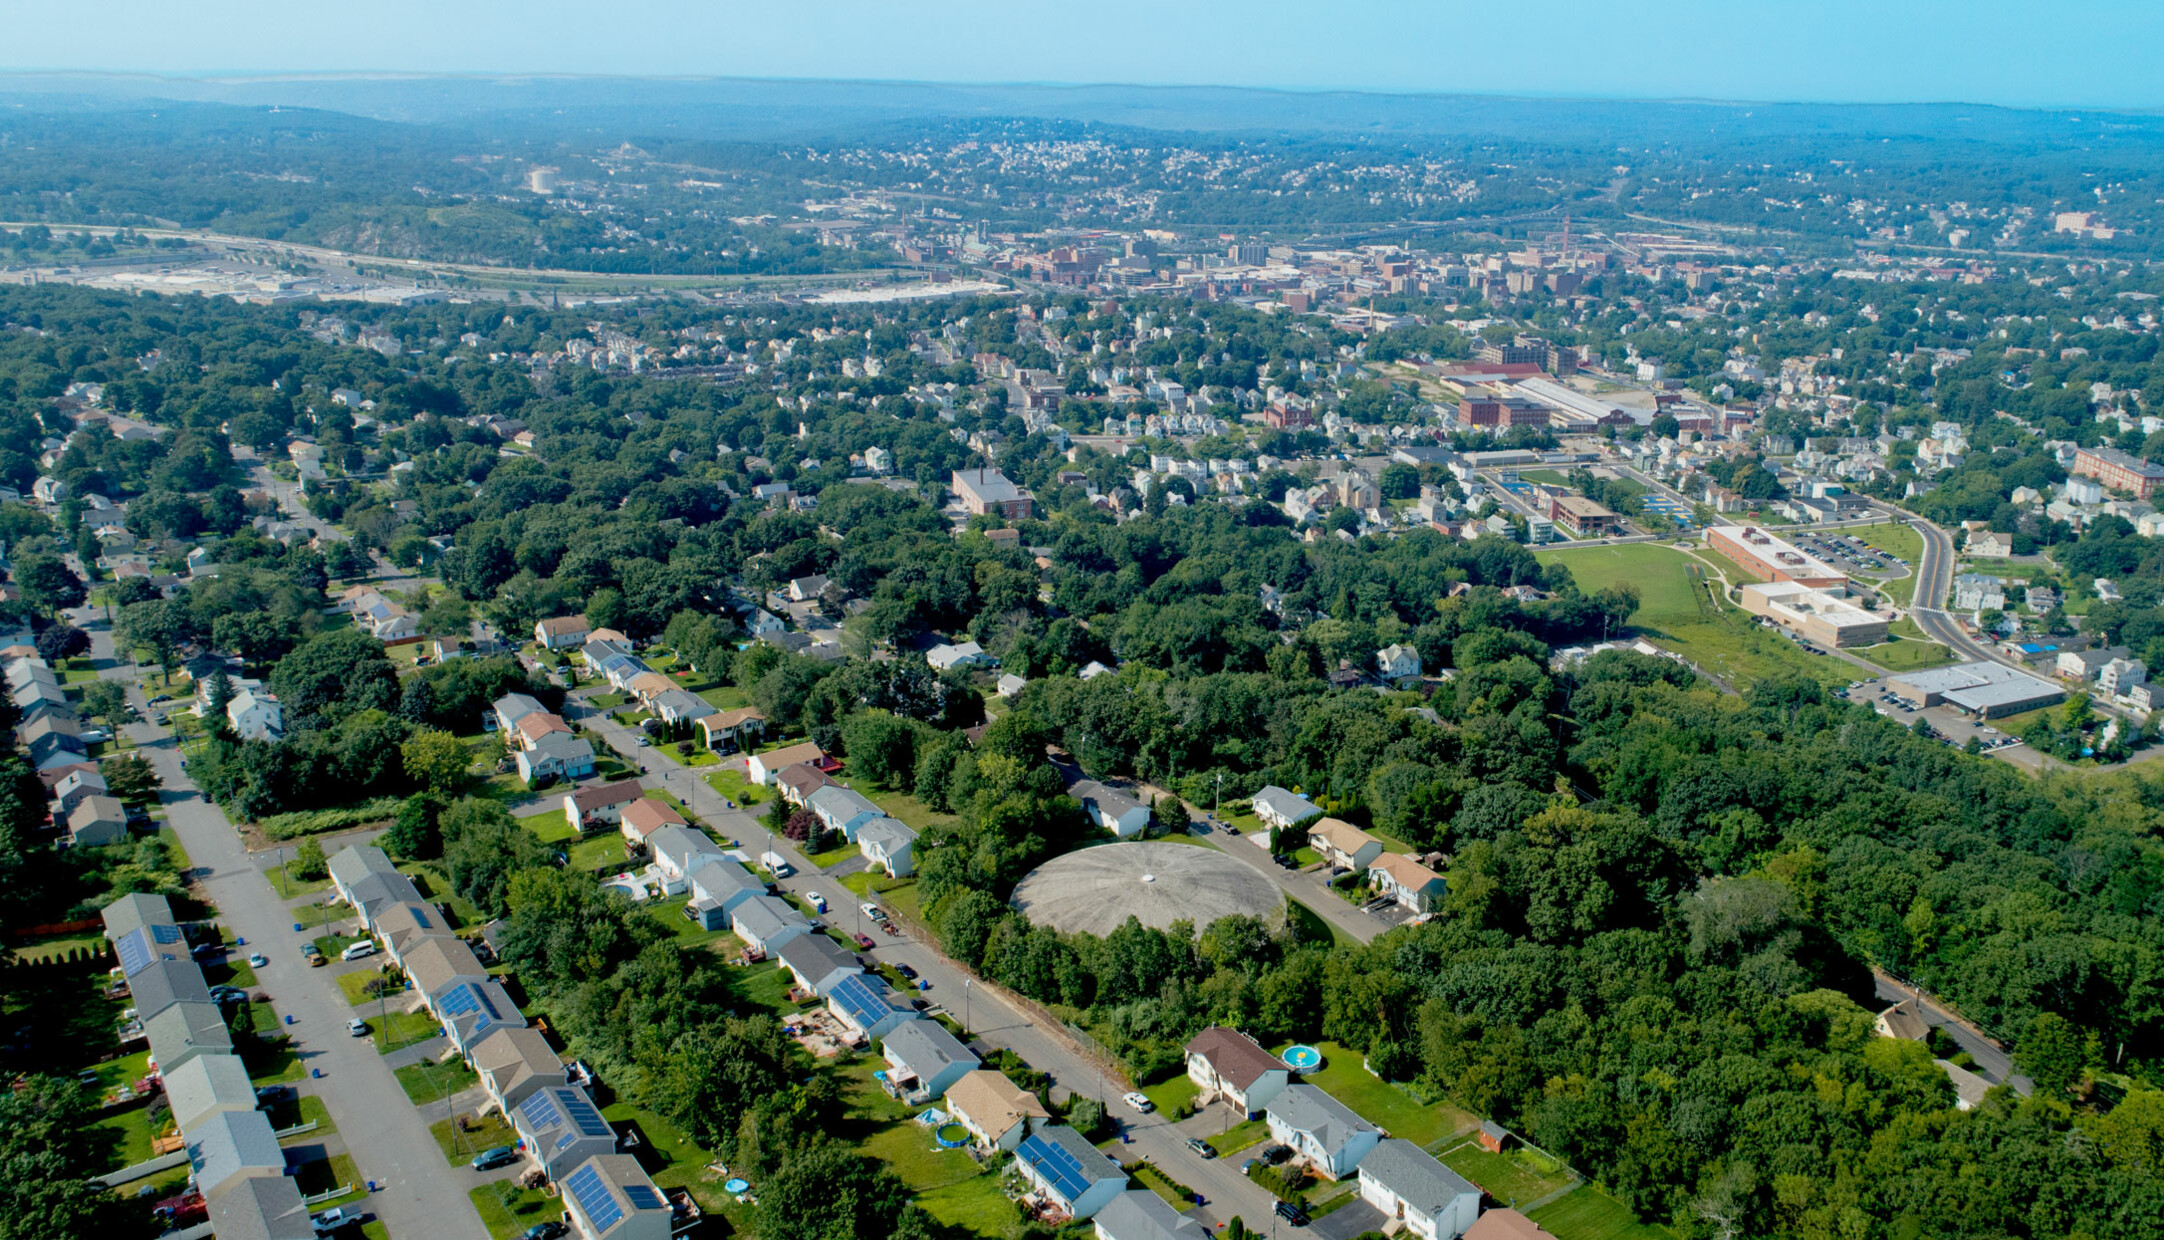 An aerial view of houses and streets in the Arlington neighborhood in Waterbury